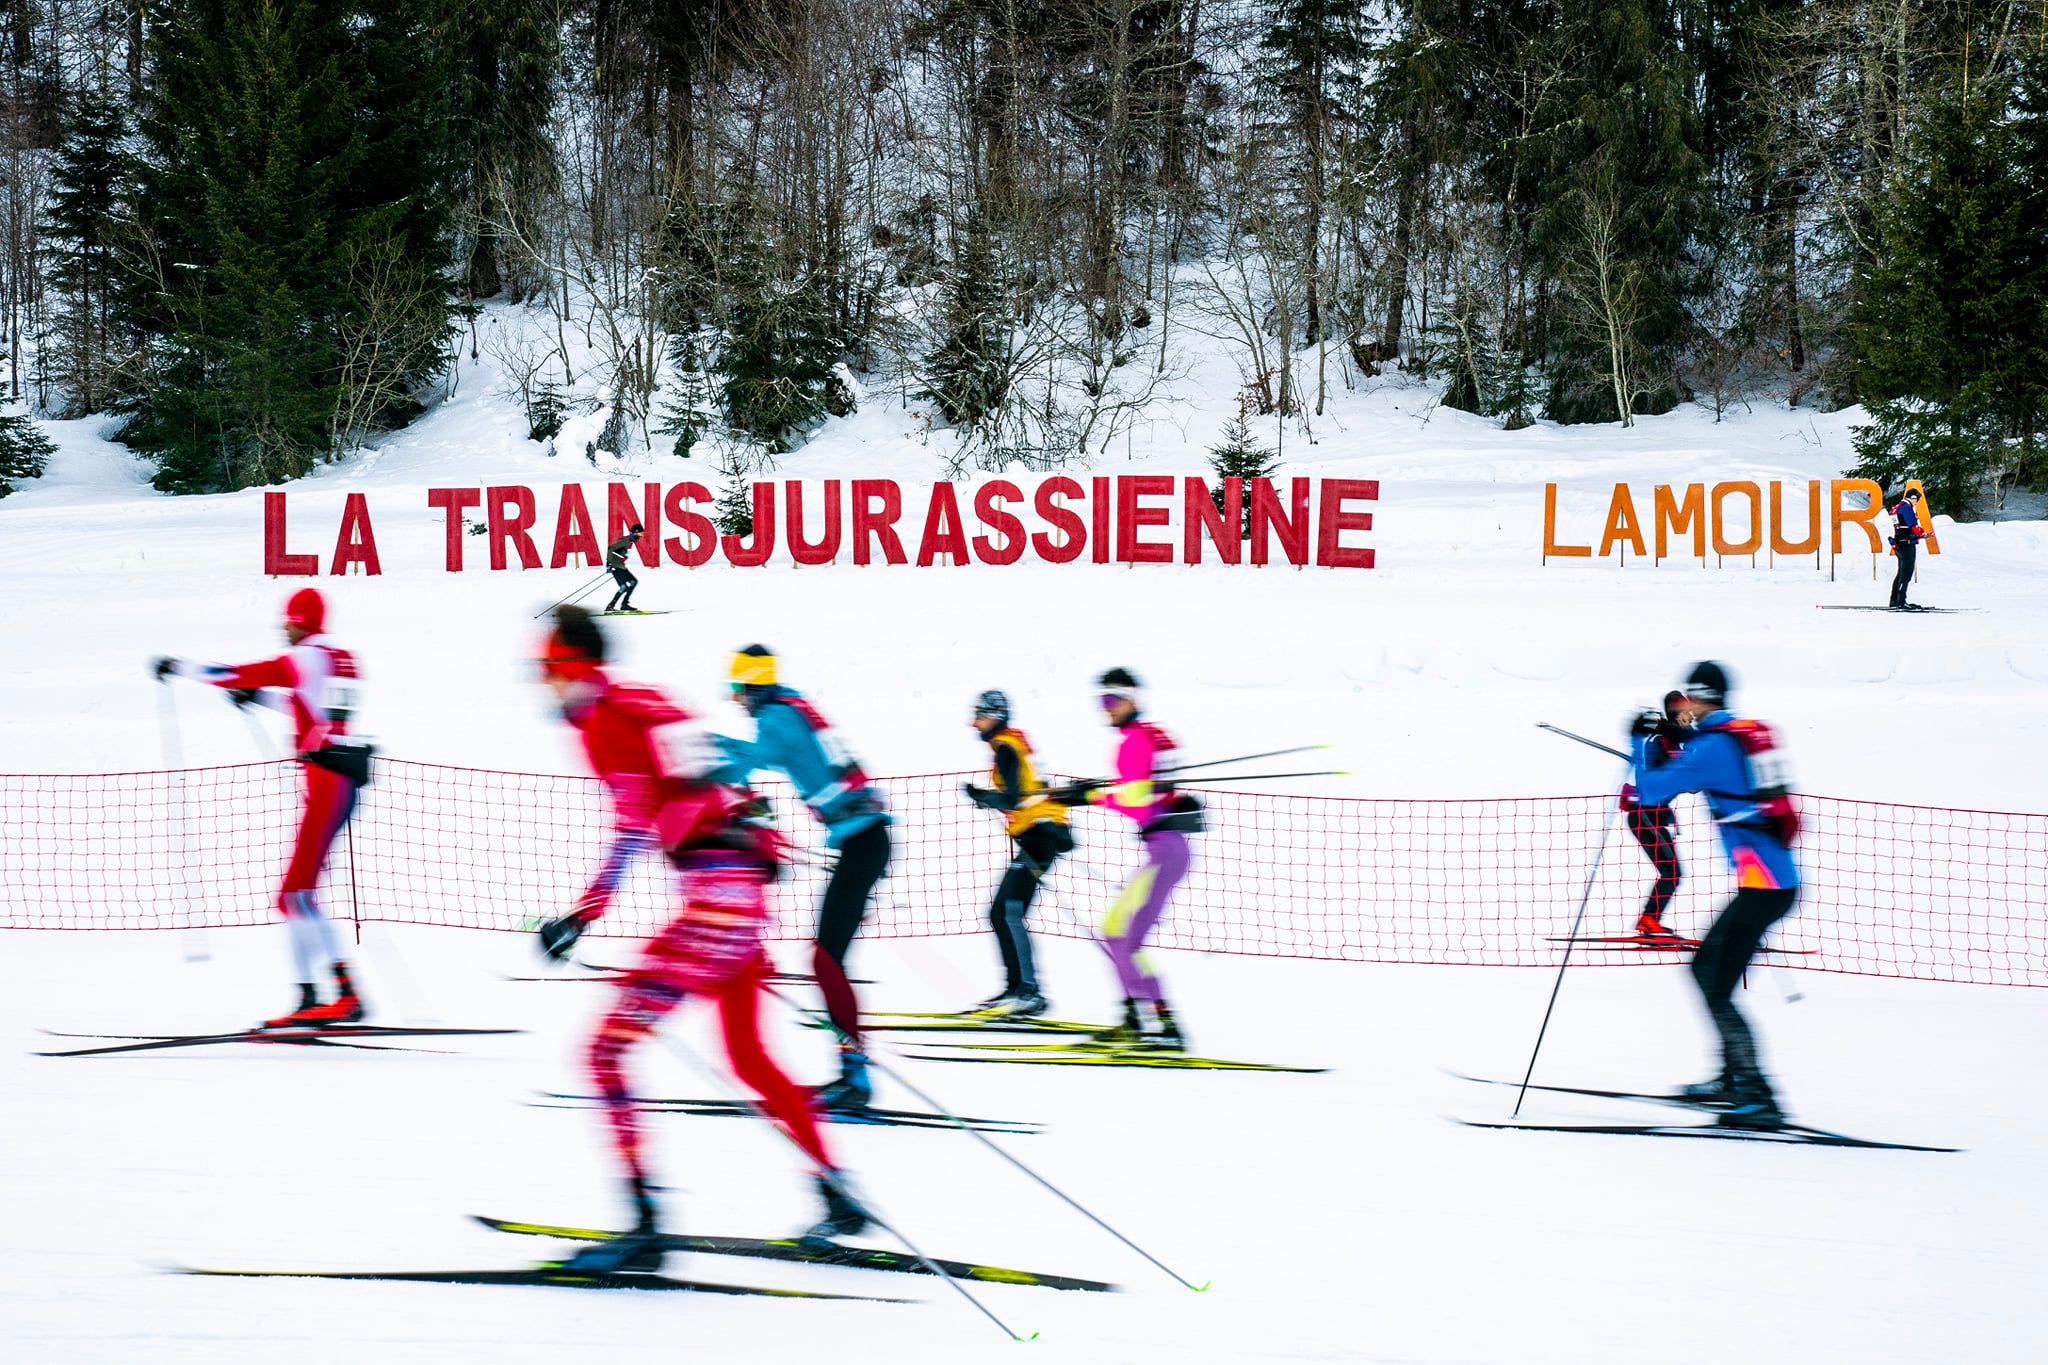 The Transju 2022 cross-country ski race in France